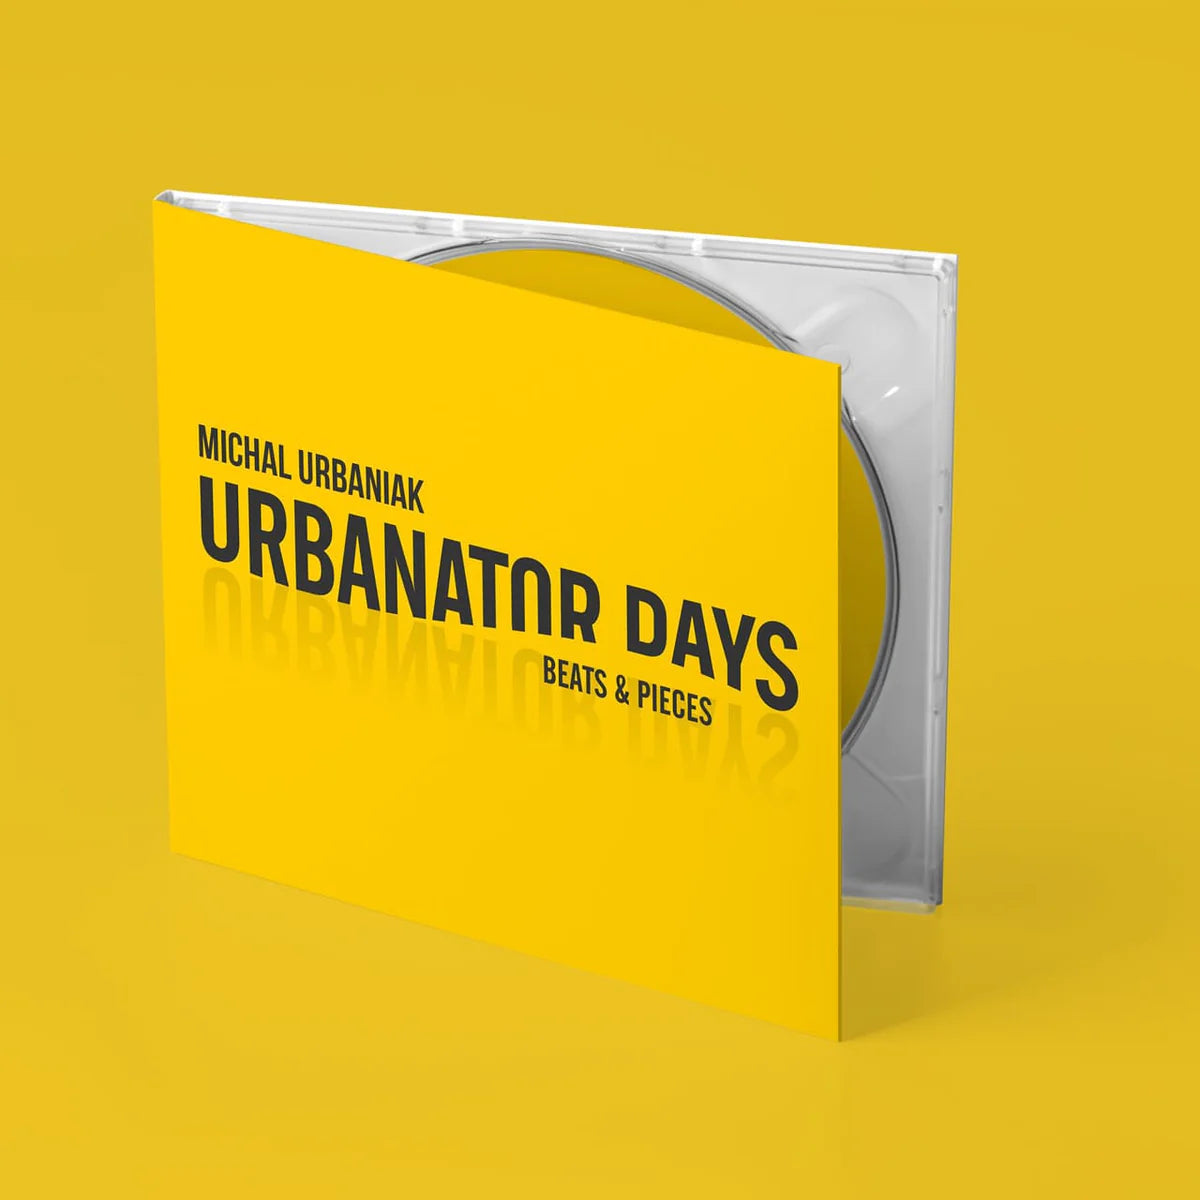 Urbanator Days "Beats & Pieces"